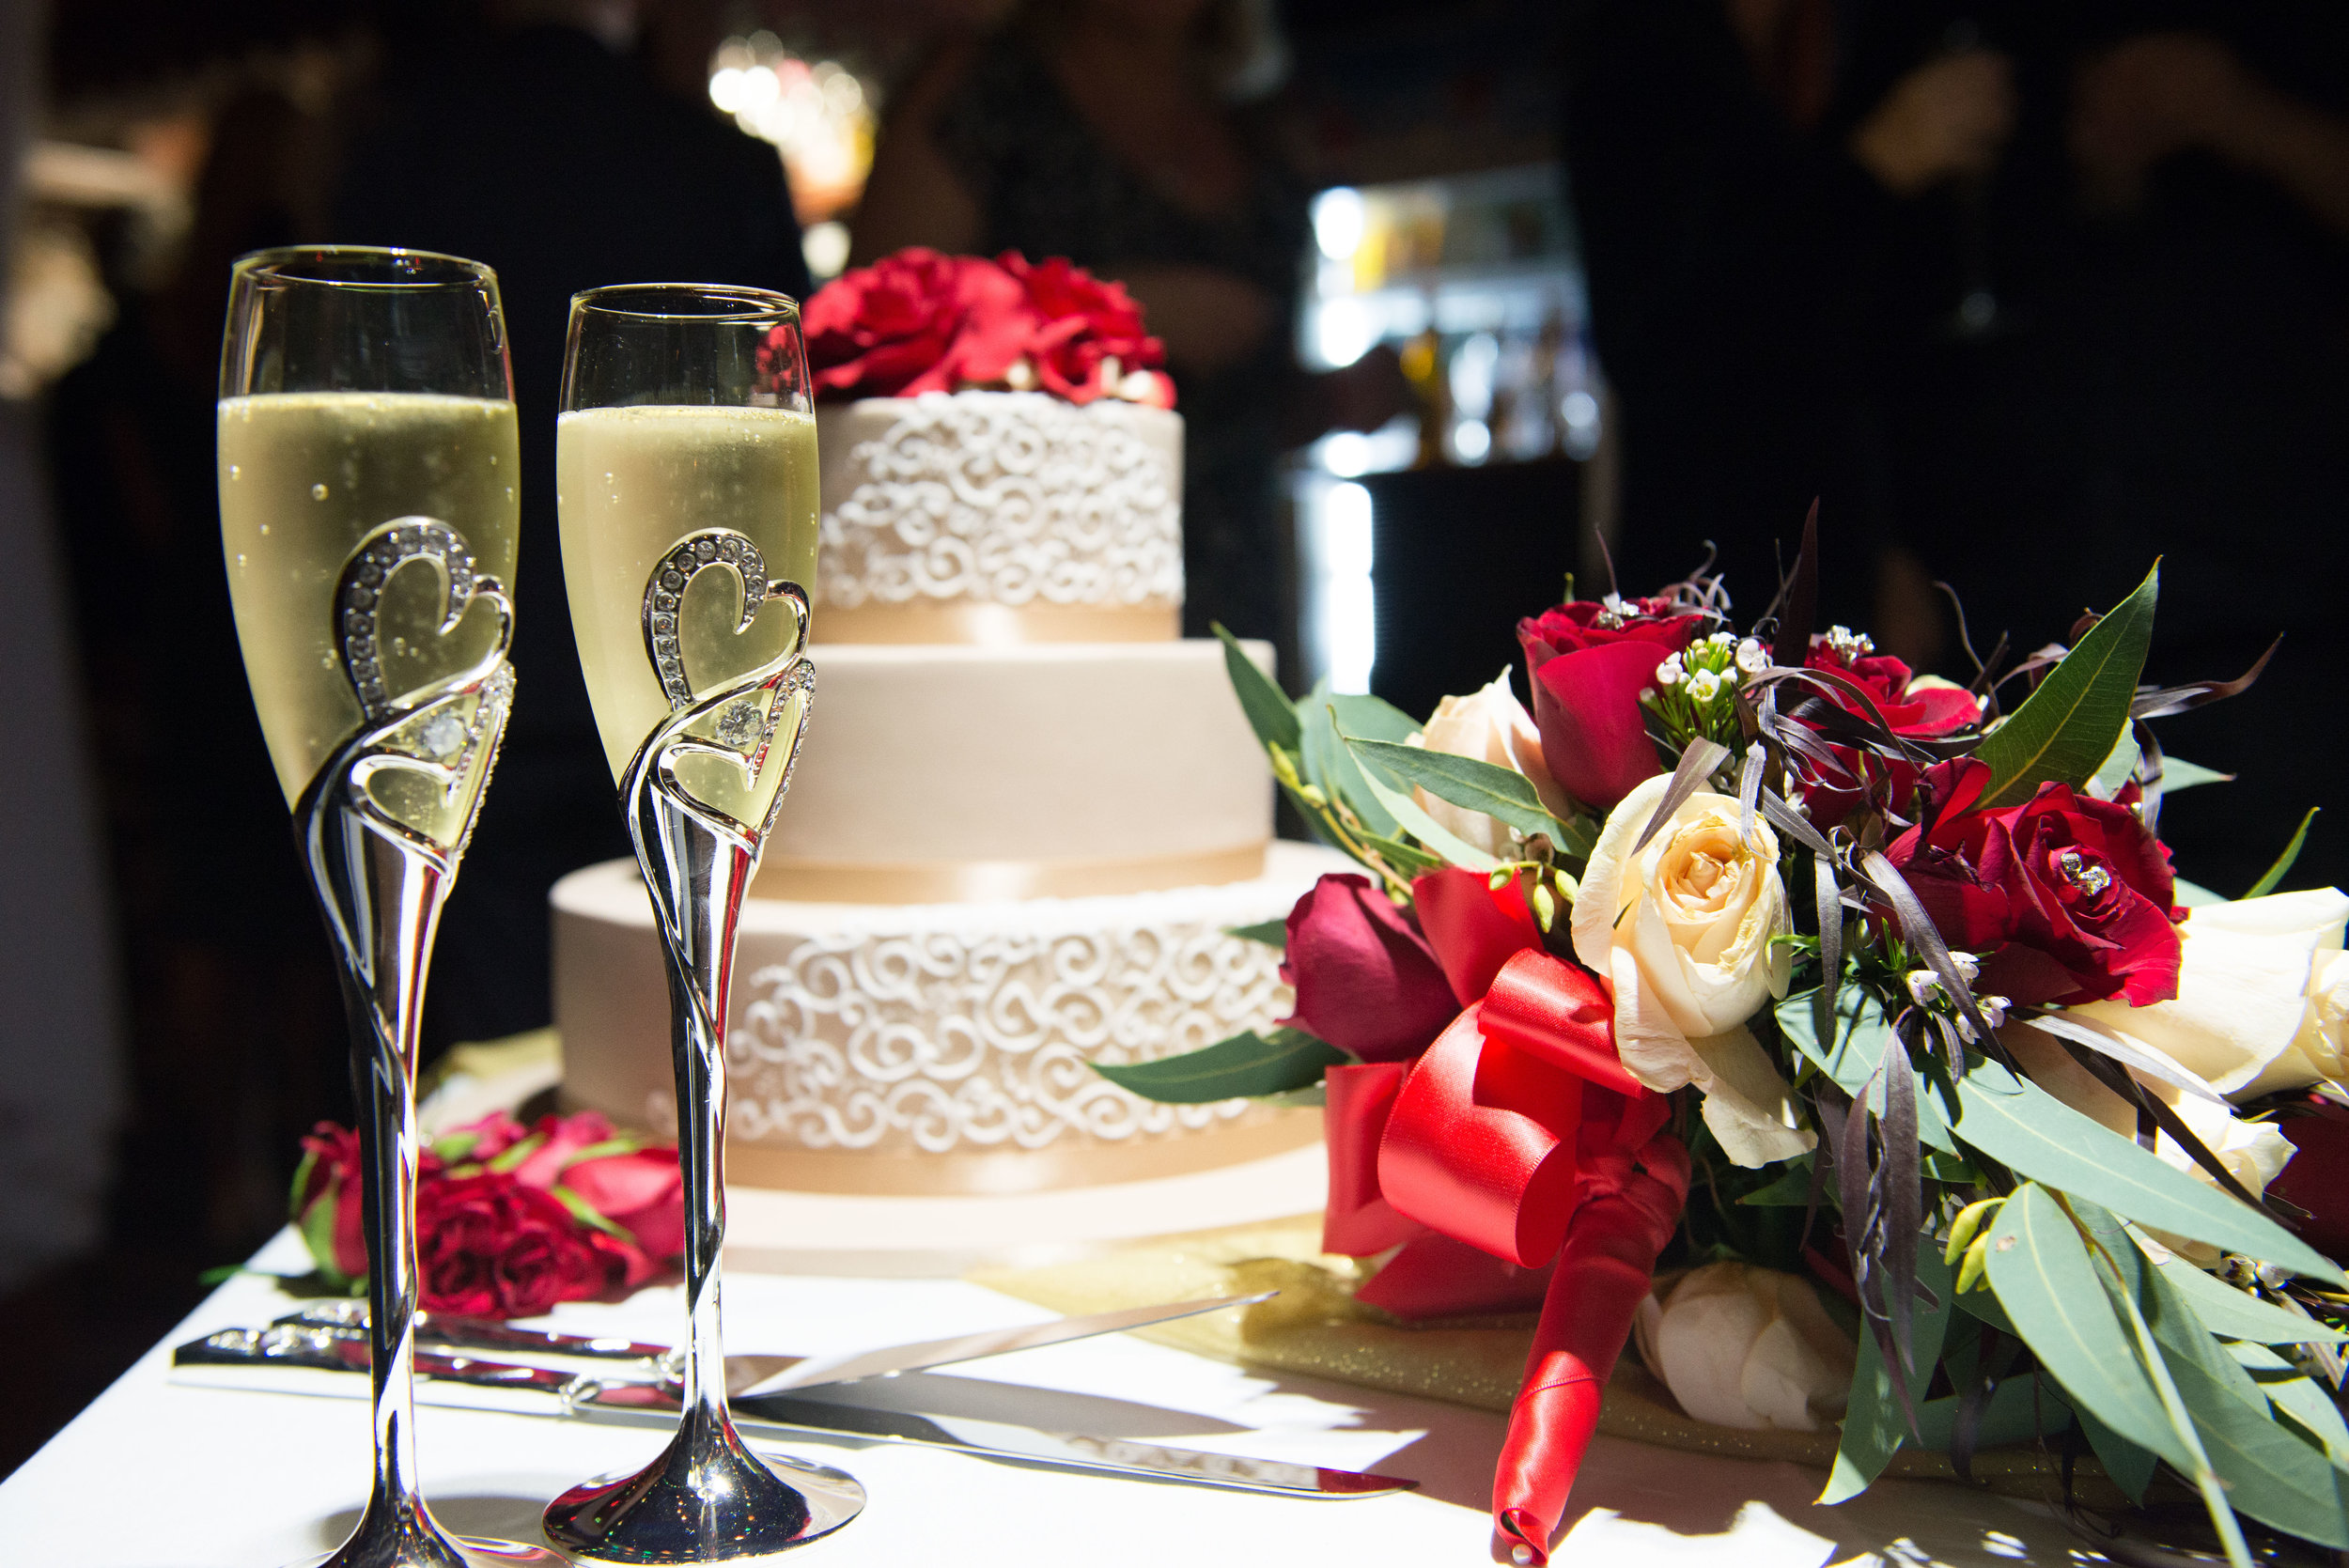 Belle wedding cake glasses champagne flowers brindley.jpg